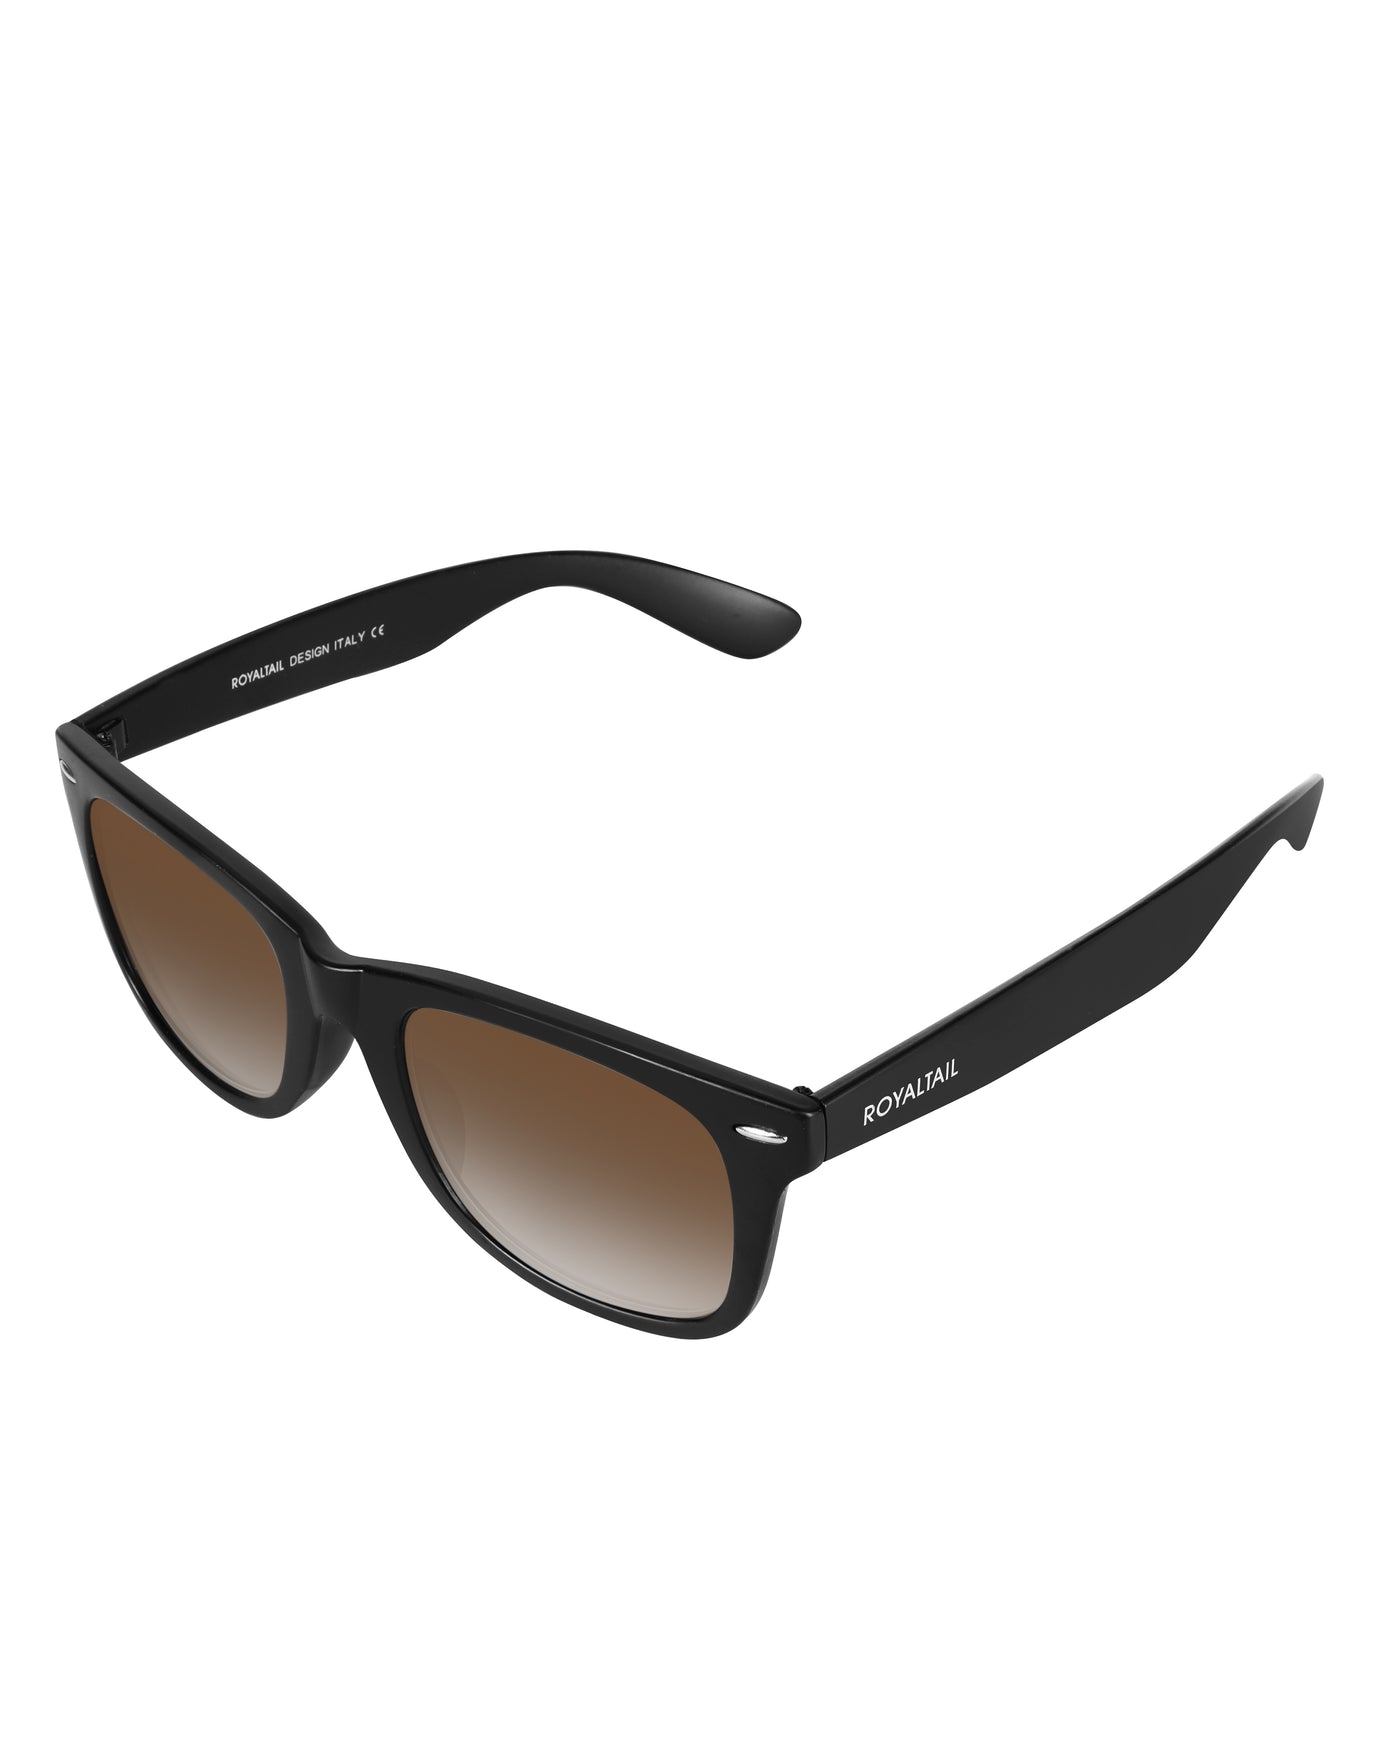 Unisex Brown Gradient Glass and Black Frame Wayfarer Sunglasses